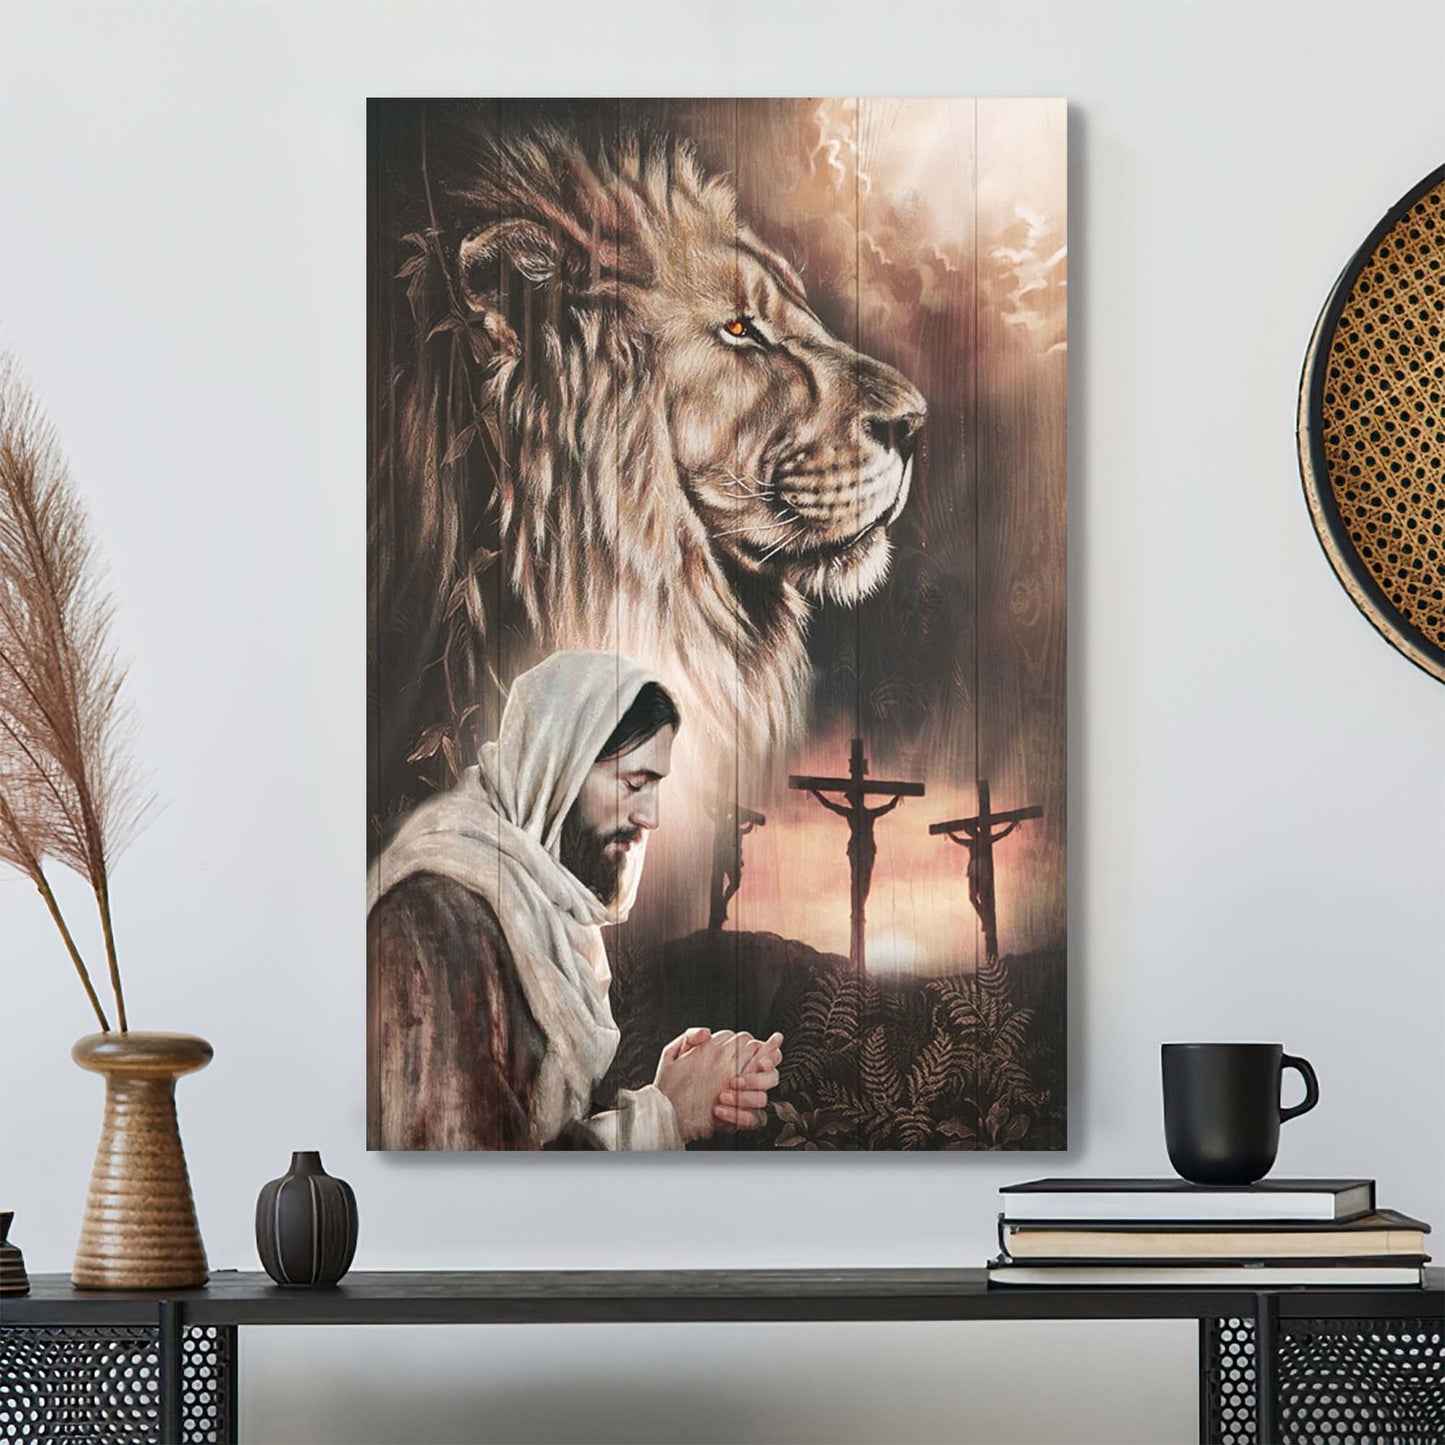 Christian Canvas Wall Art - Jesus Canvas - The Lion Of Judah 2 Canvas - Bible Verse Canvas - Ciaocustom